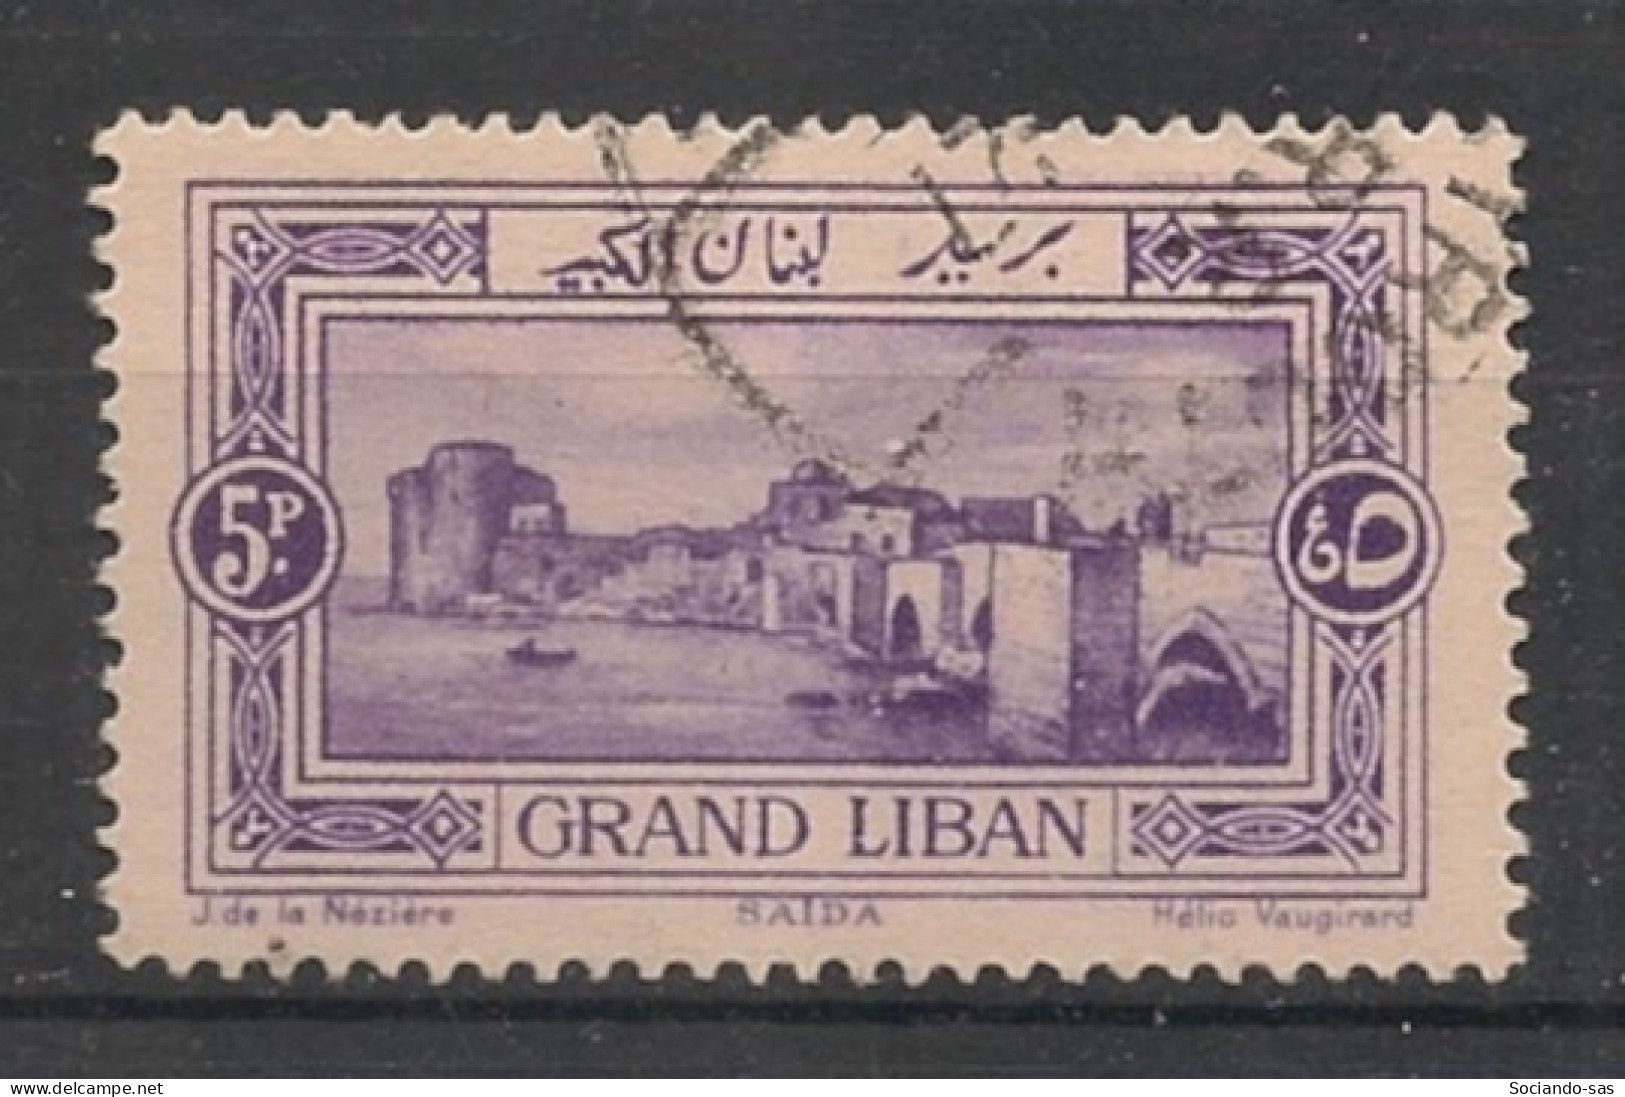 GRAND LIBAN - 1925 - N°YT. 60 - Saida 5pi Violet - Oblitéré / Used - Gebraucht